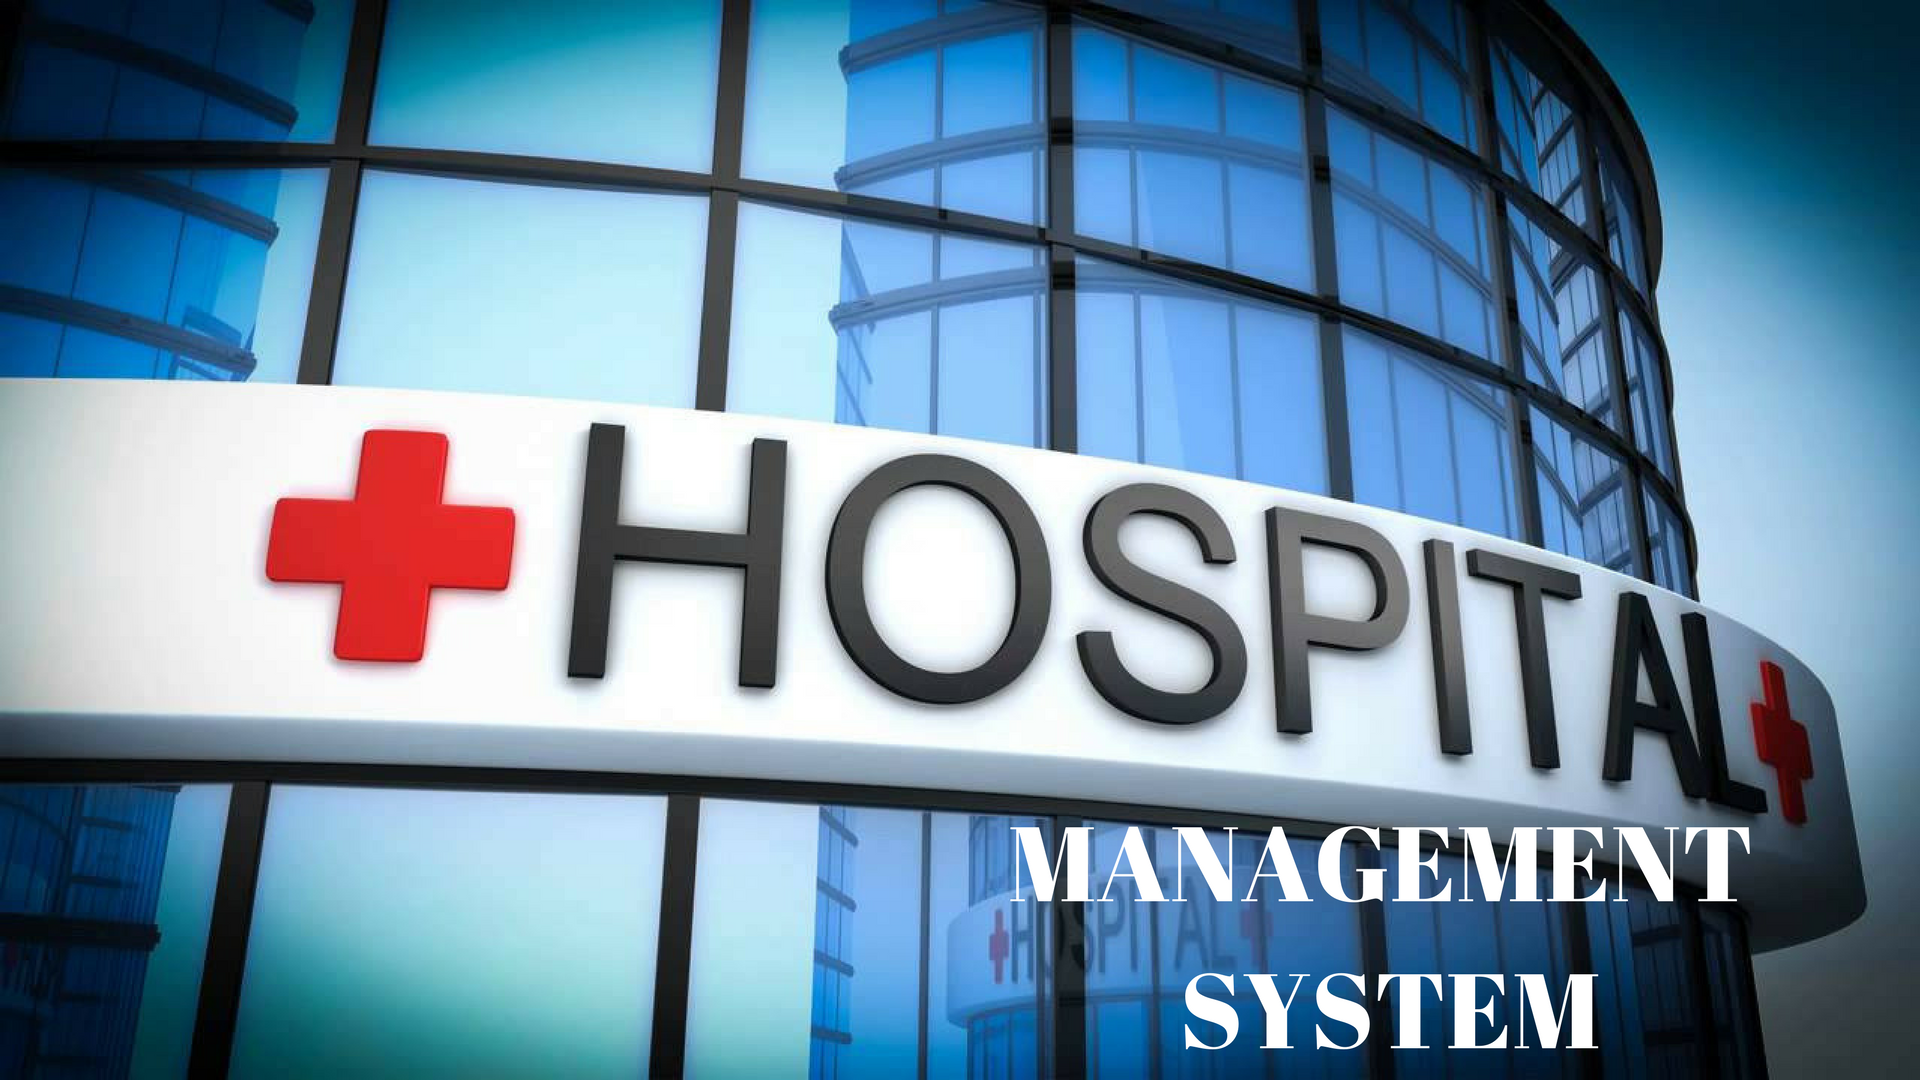 Hospital Management System - Hospital Images, Transparent background PNG HD thumbnail